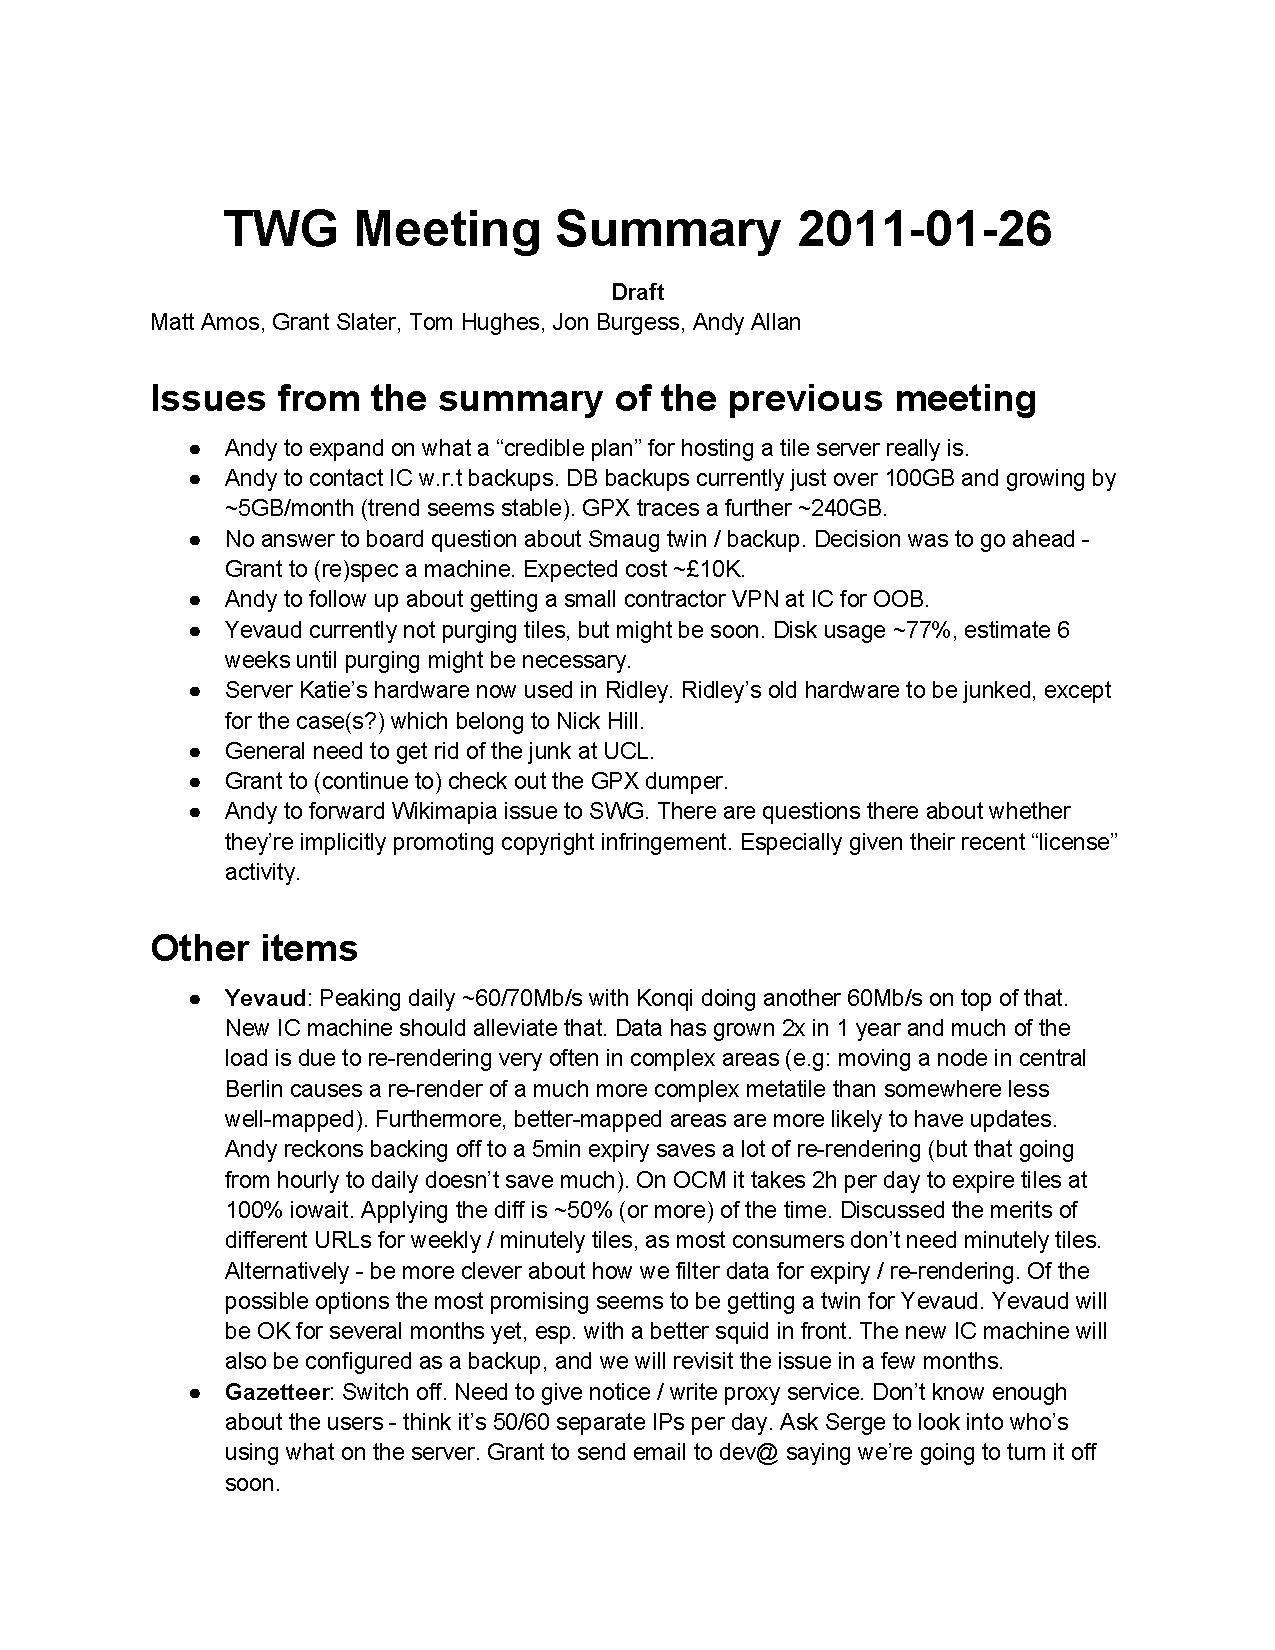 TWGmeetingsummary2011-01-26.pdf